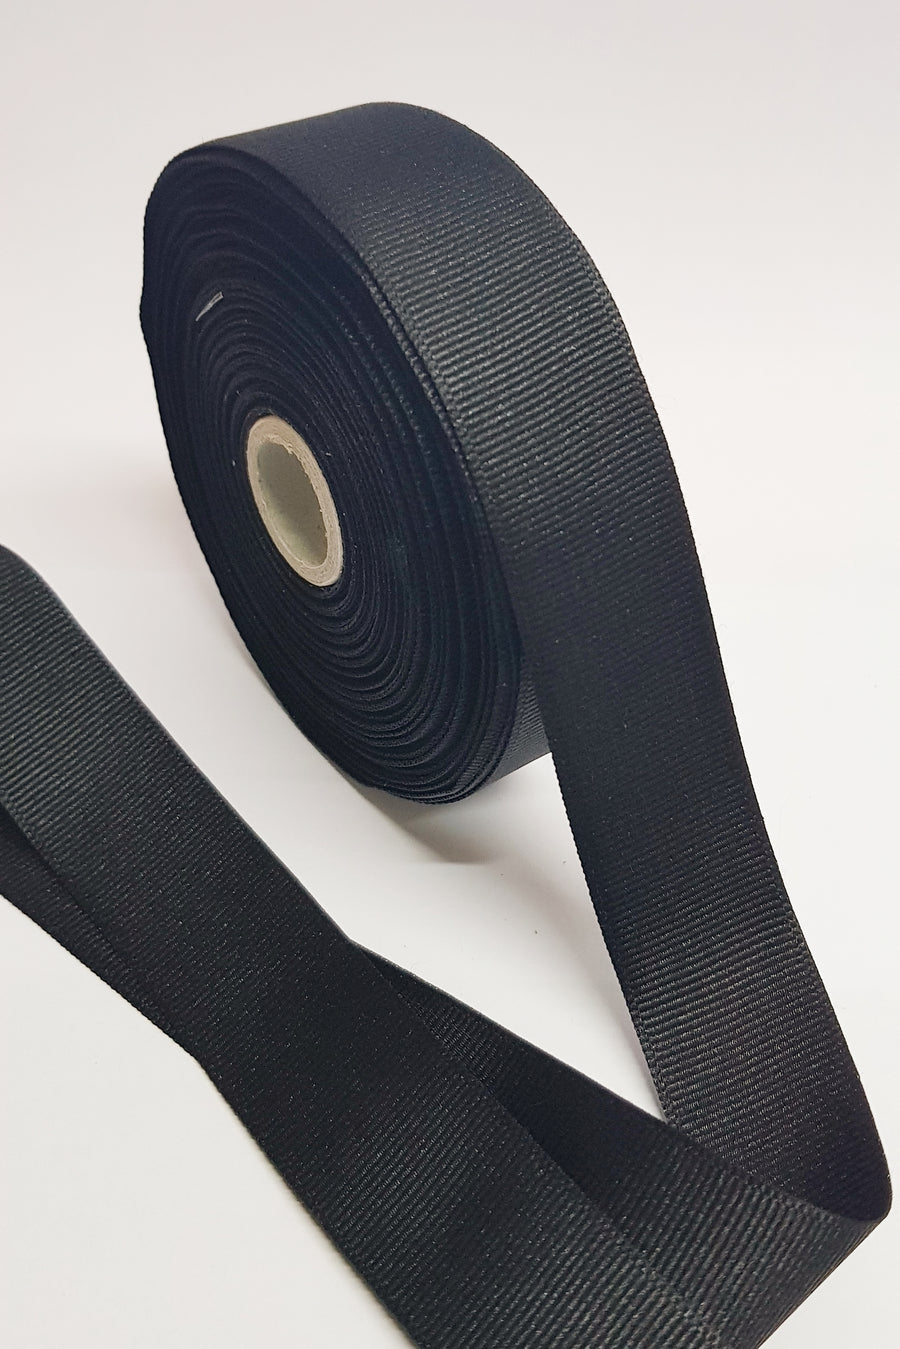 Nylon Grosgrain Ribbon - 1 inch - Black